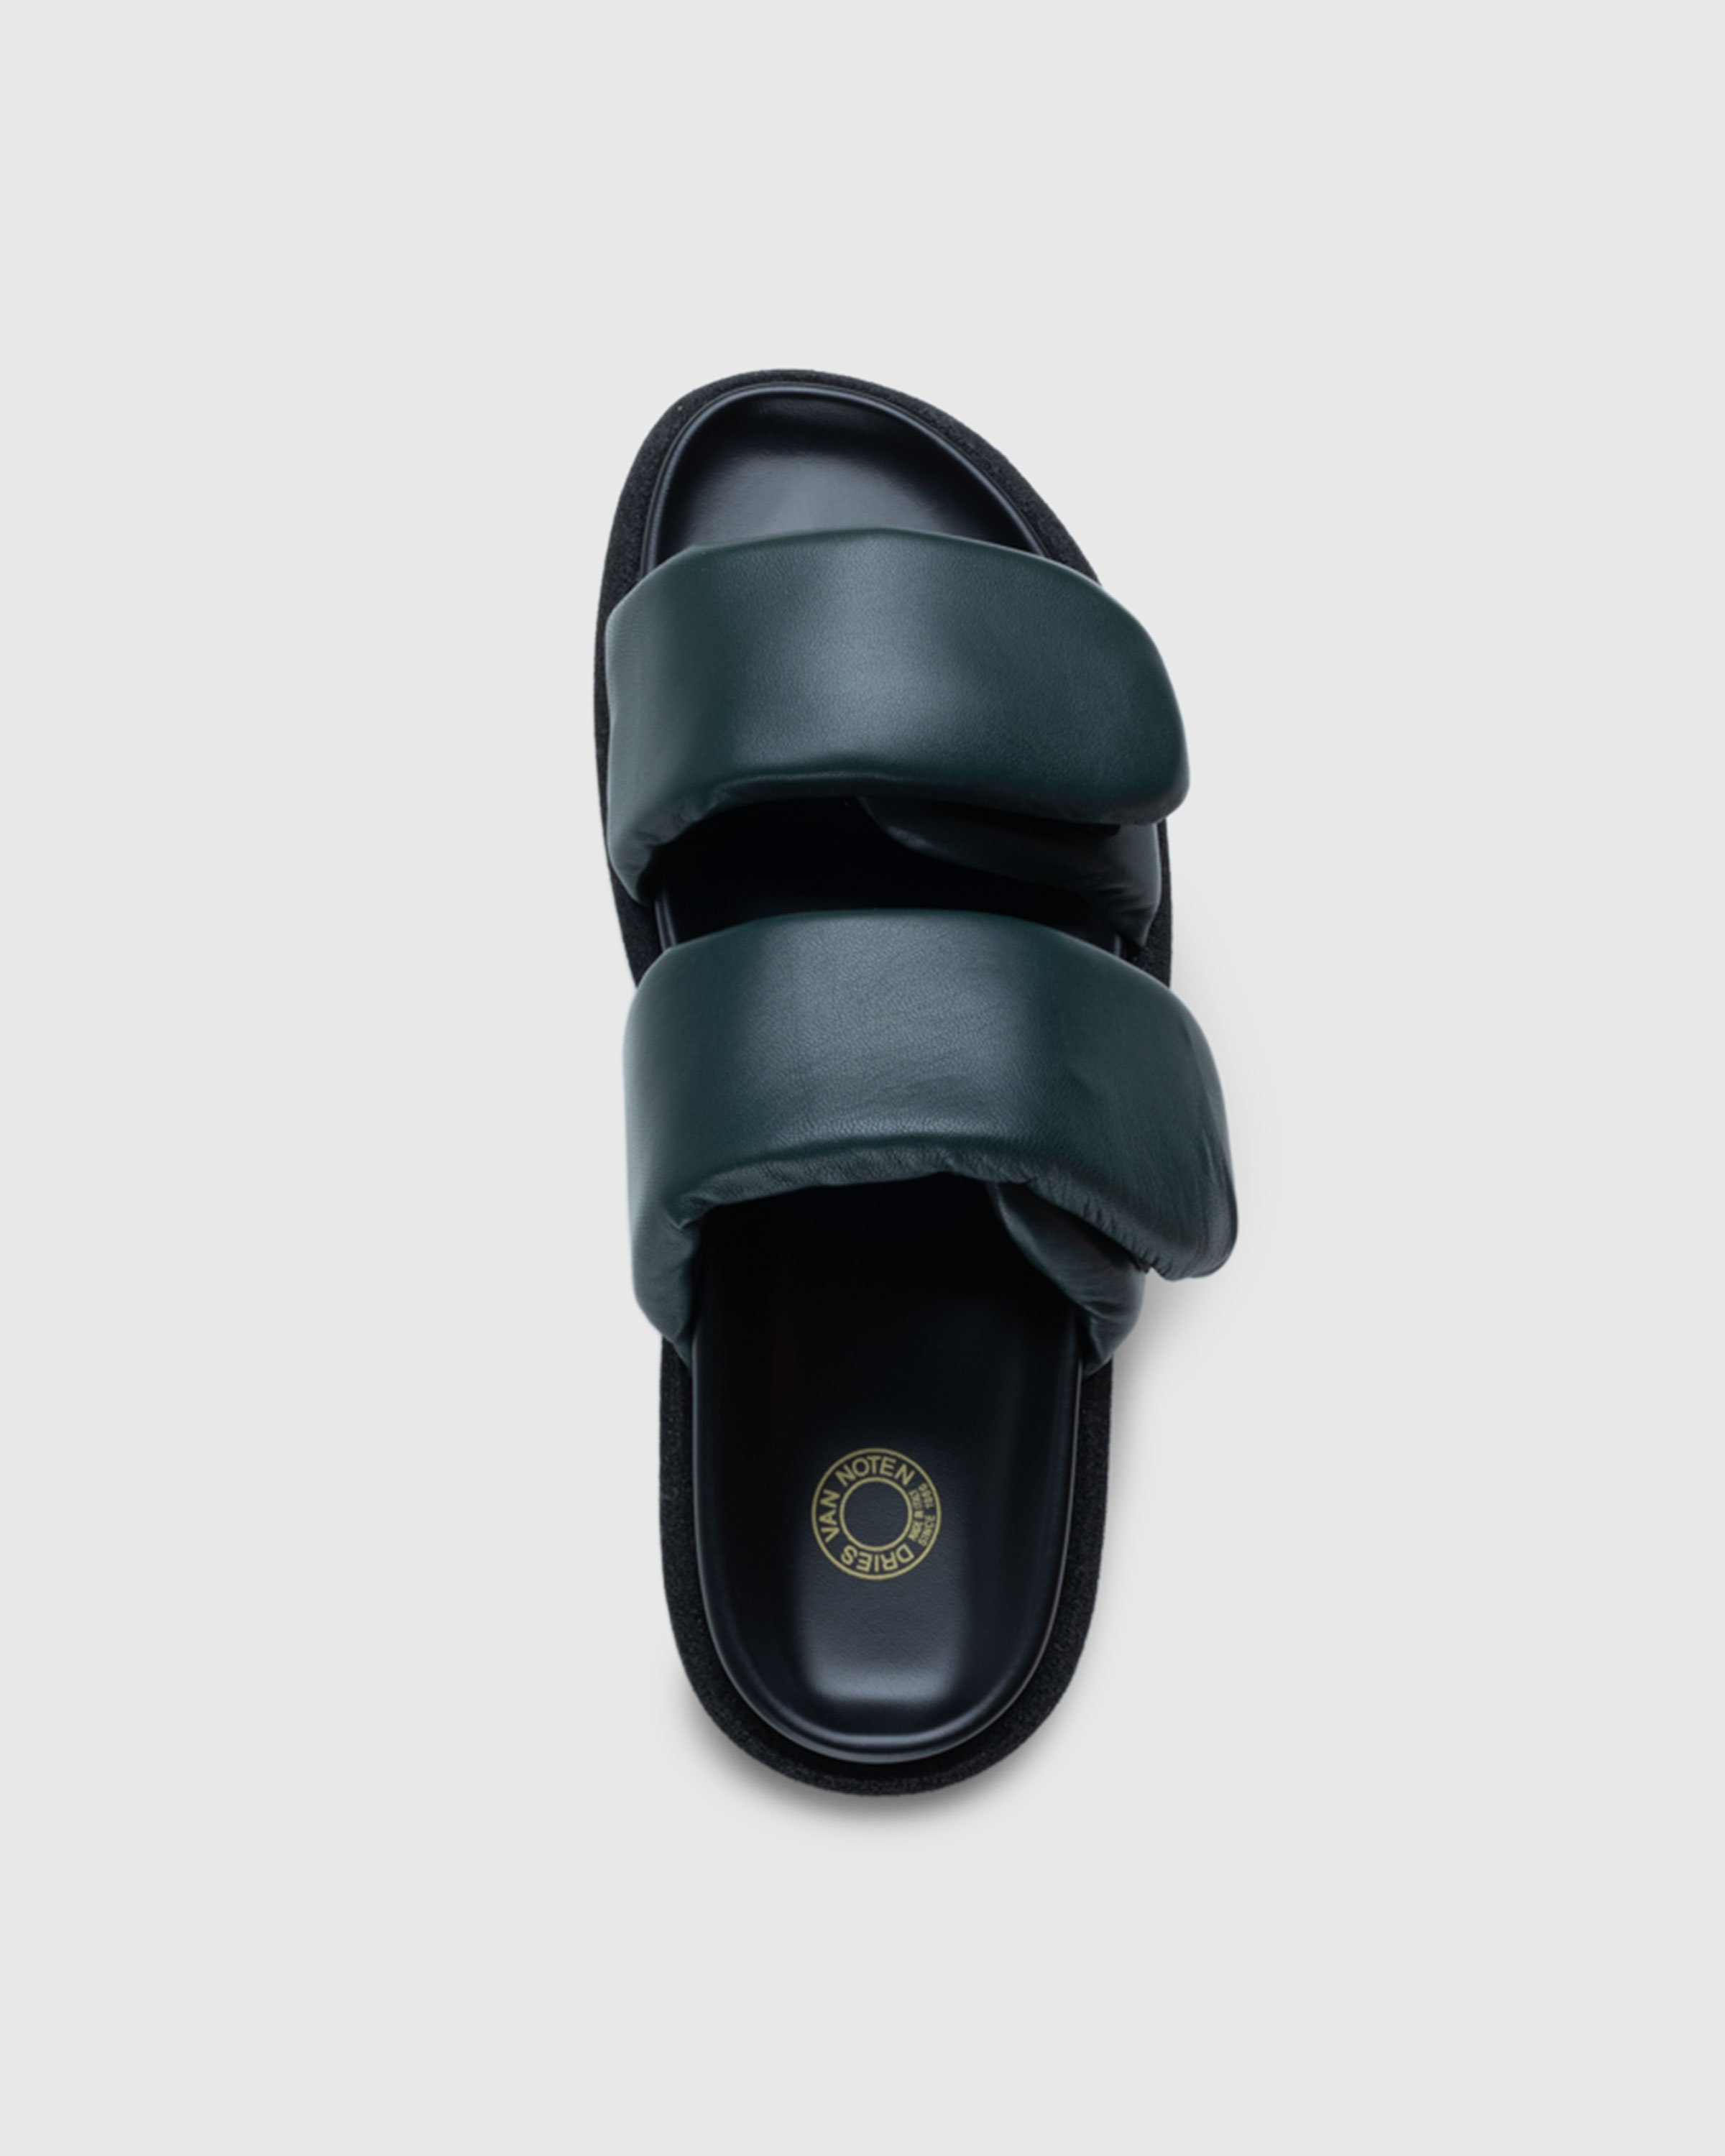 Dries van Noten - Leather Platform Sandals Green - Footwear - Green - Image 5